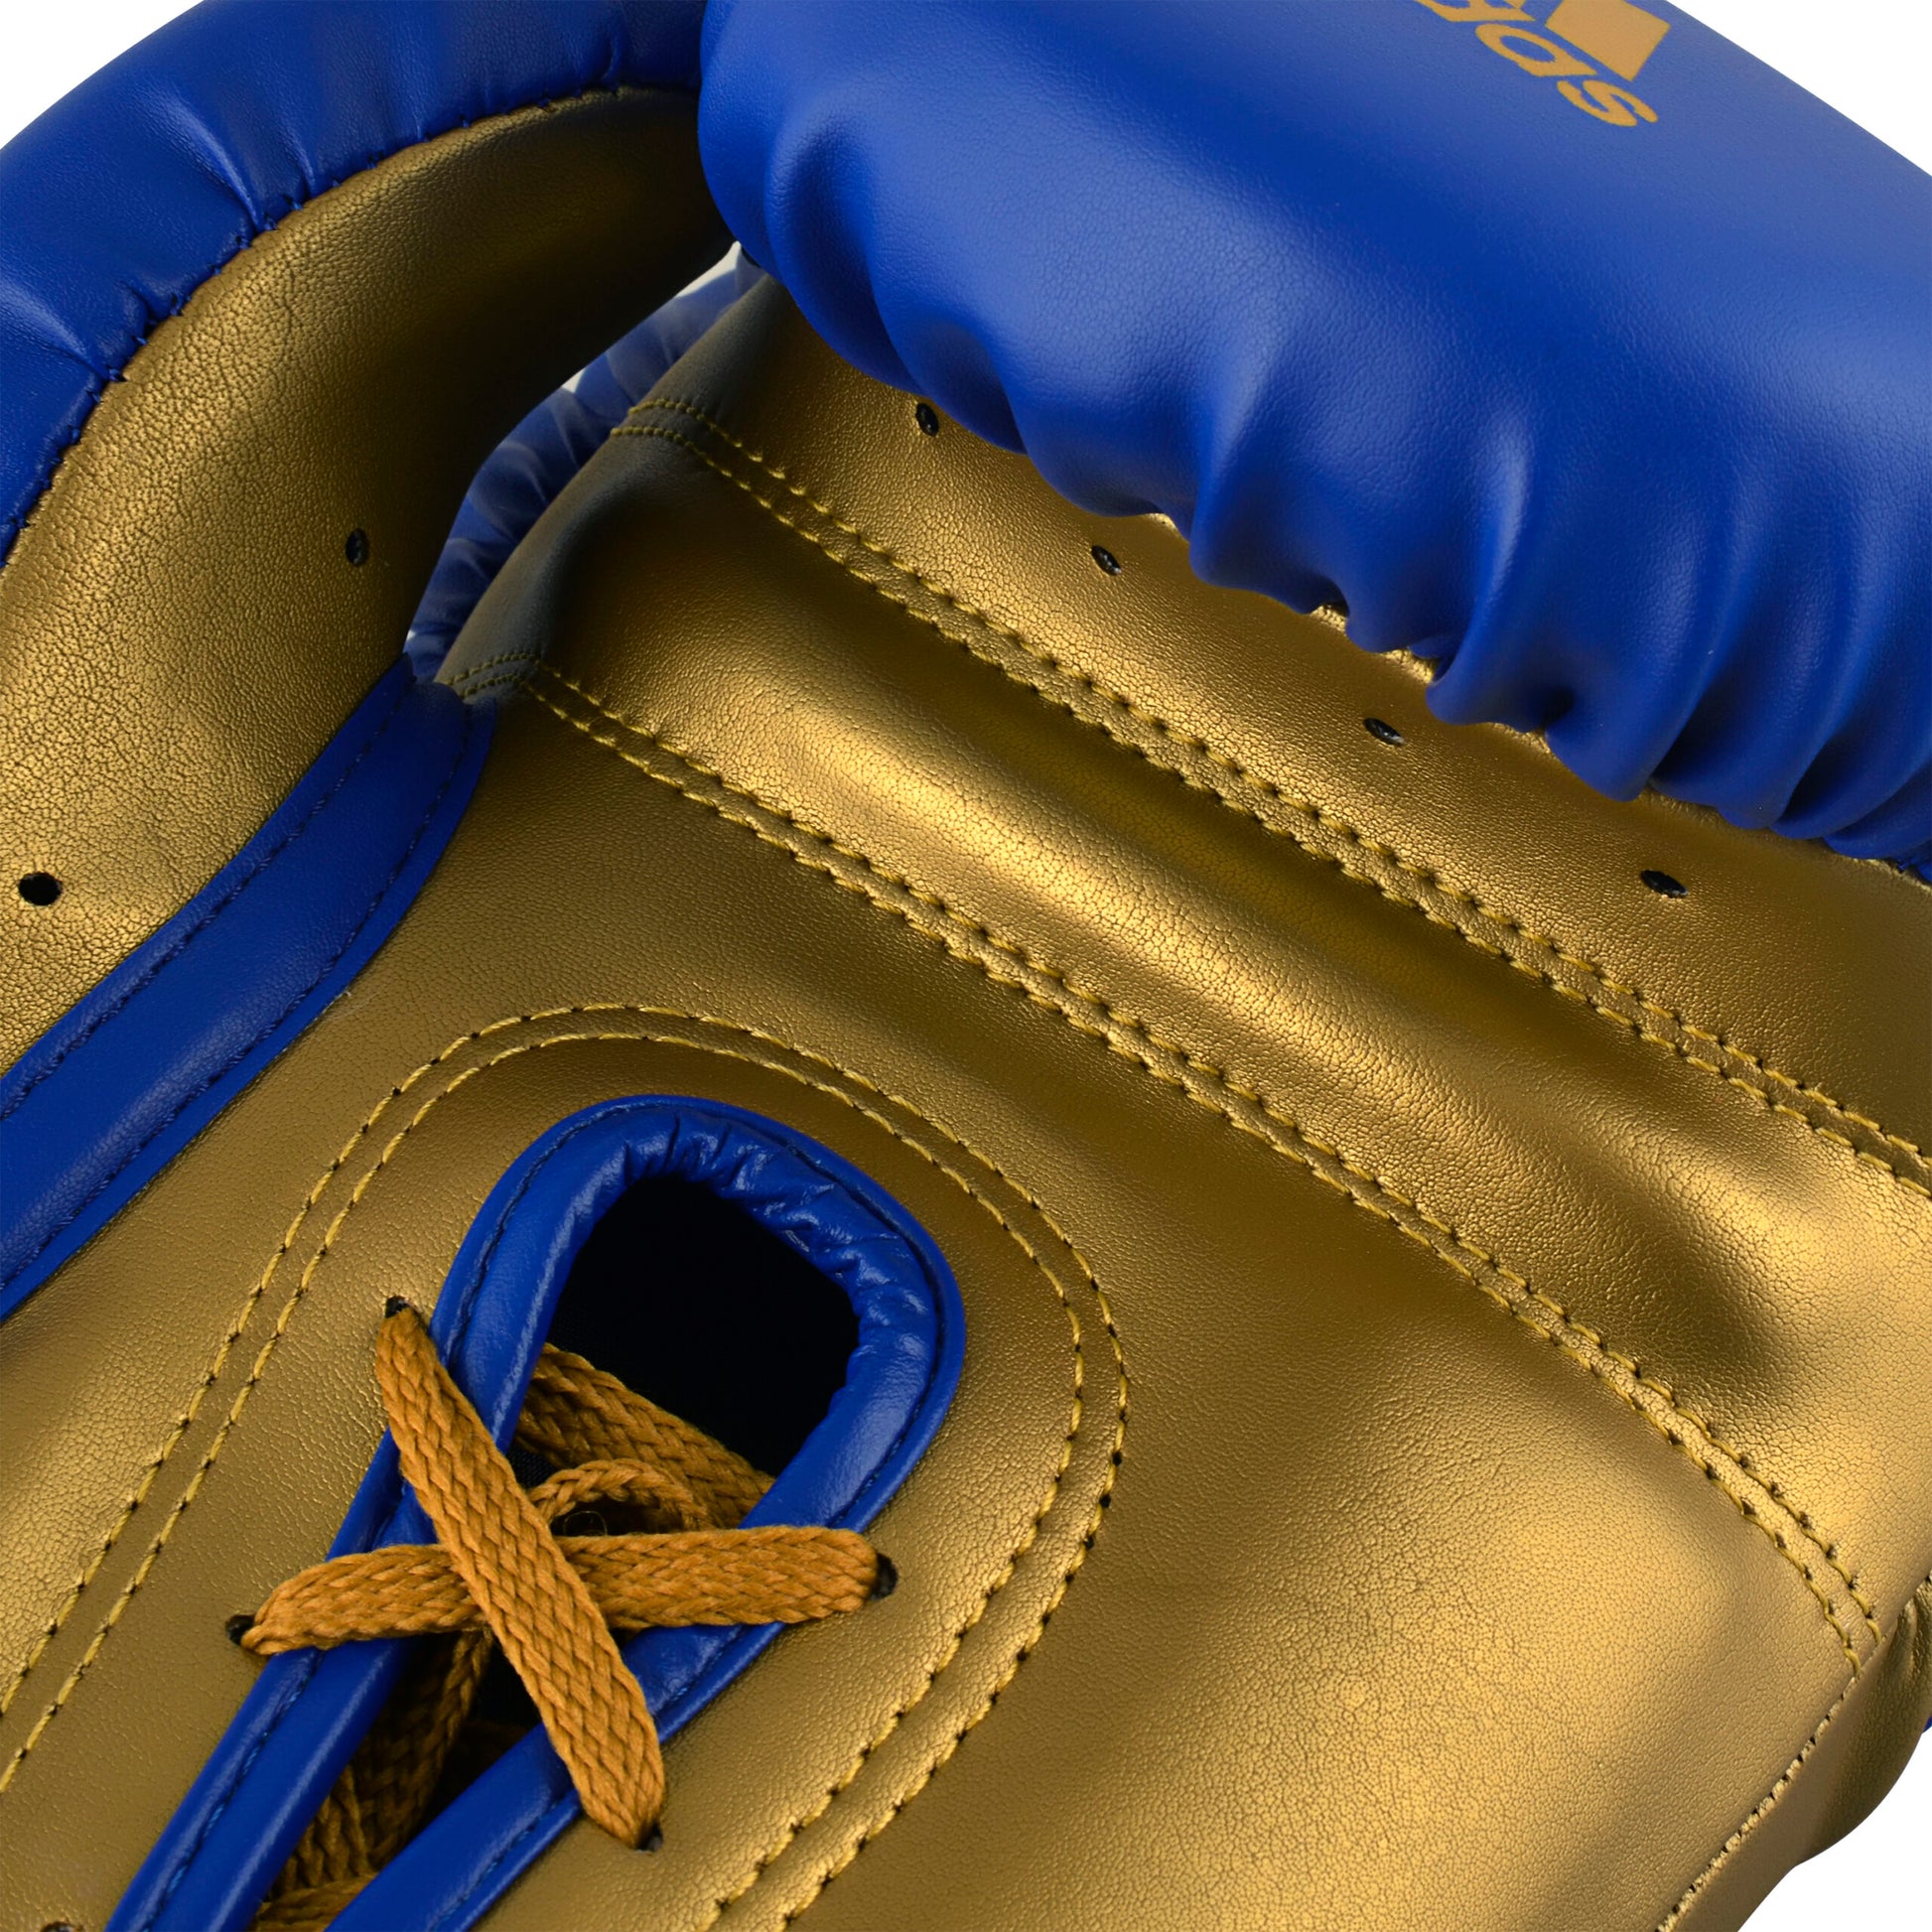 Adispd350tg Adidas Tilt 350 Pro Training Boxing Gloves Blue Gold 06